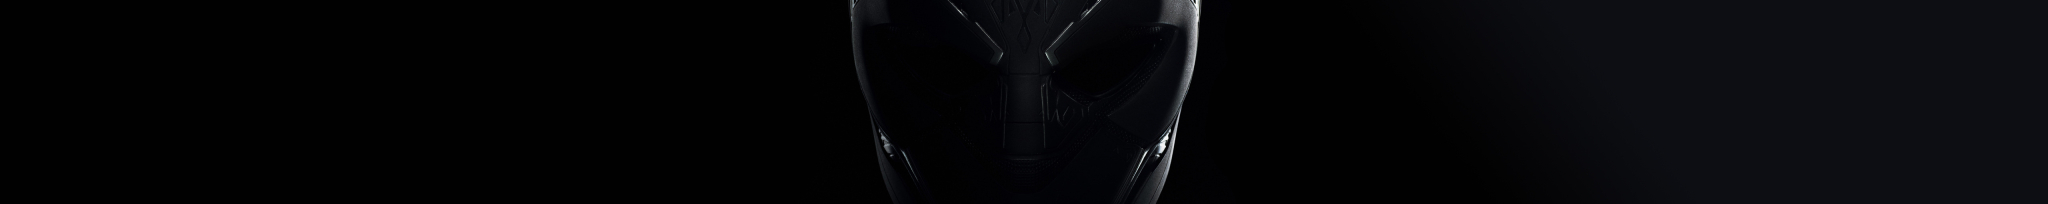 2048x204 Black Panther Wakanda Forever 4K 2048x204 Resolution Wallpaper ...